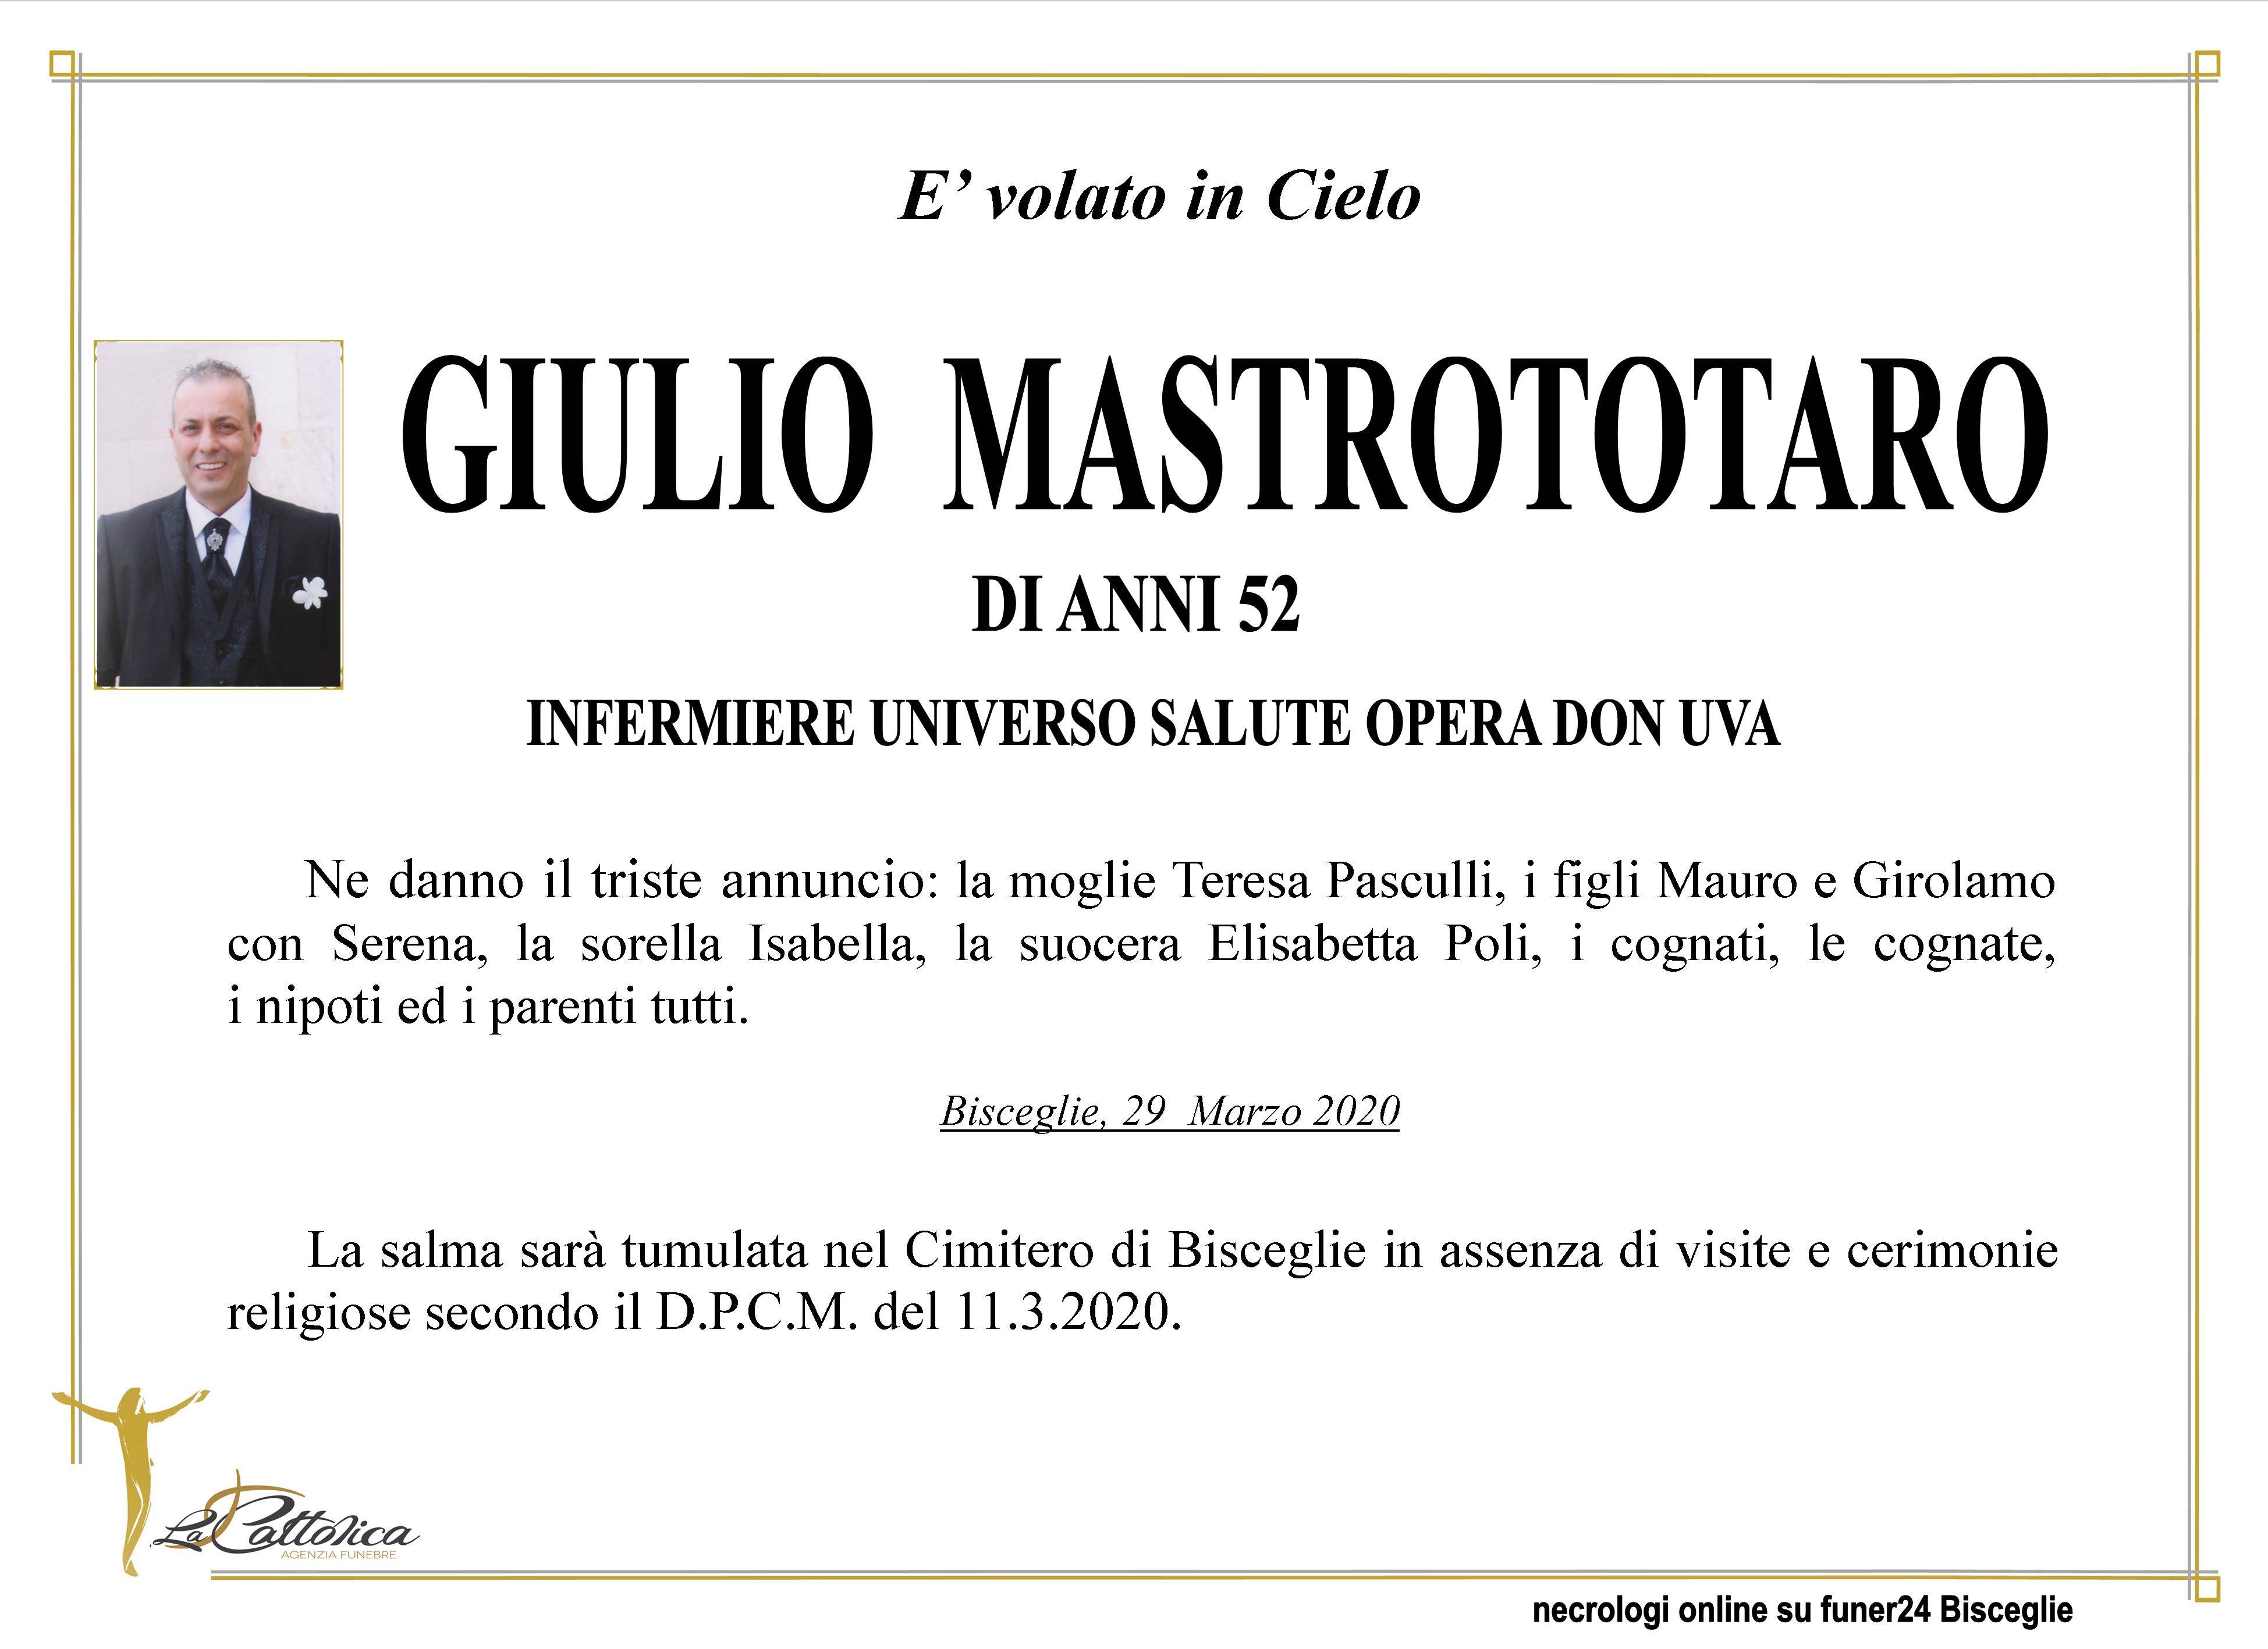 Giulio Mastrototaro